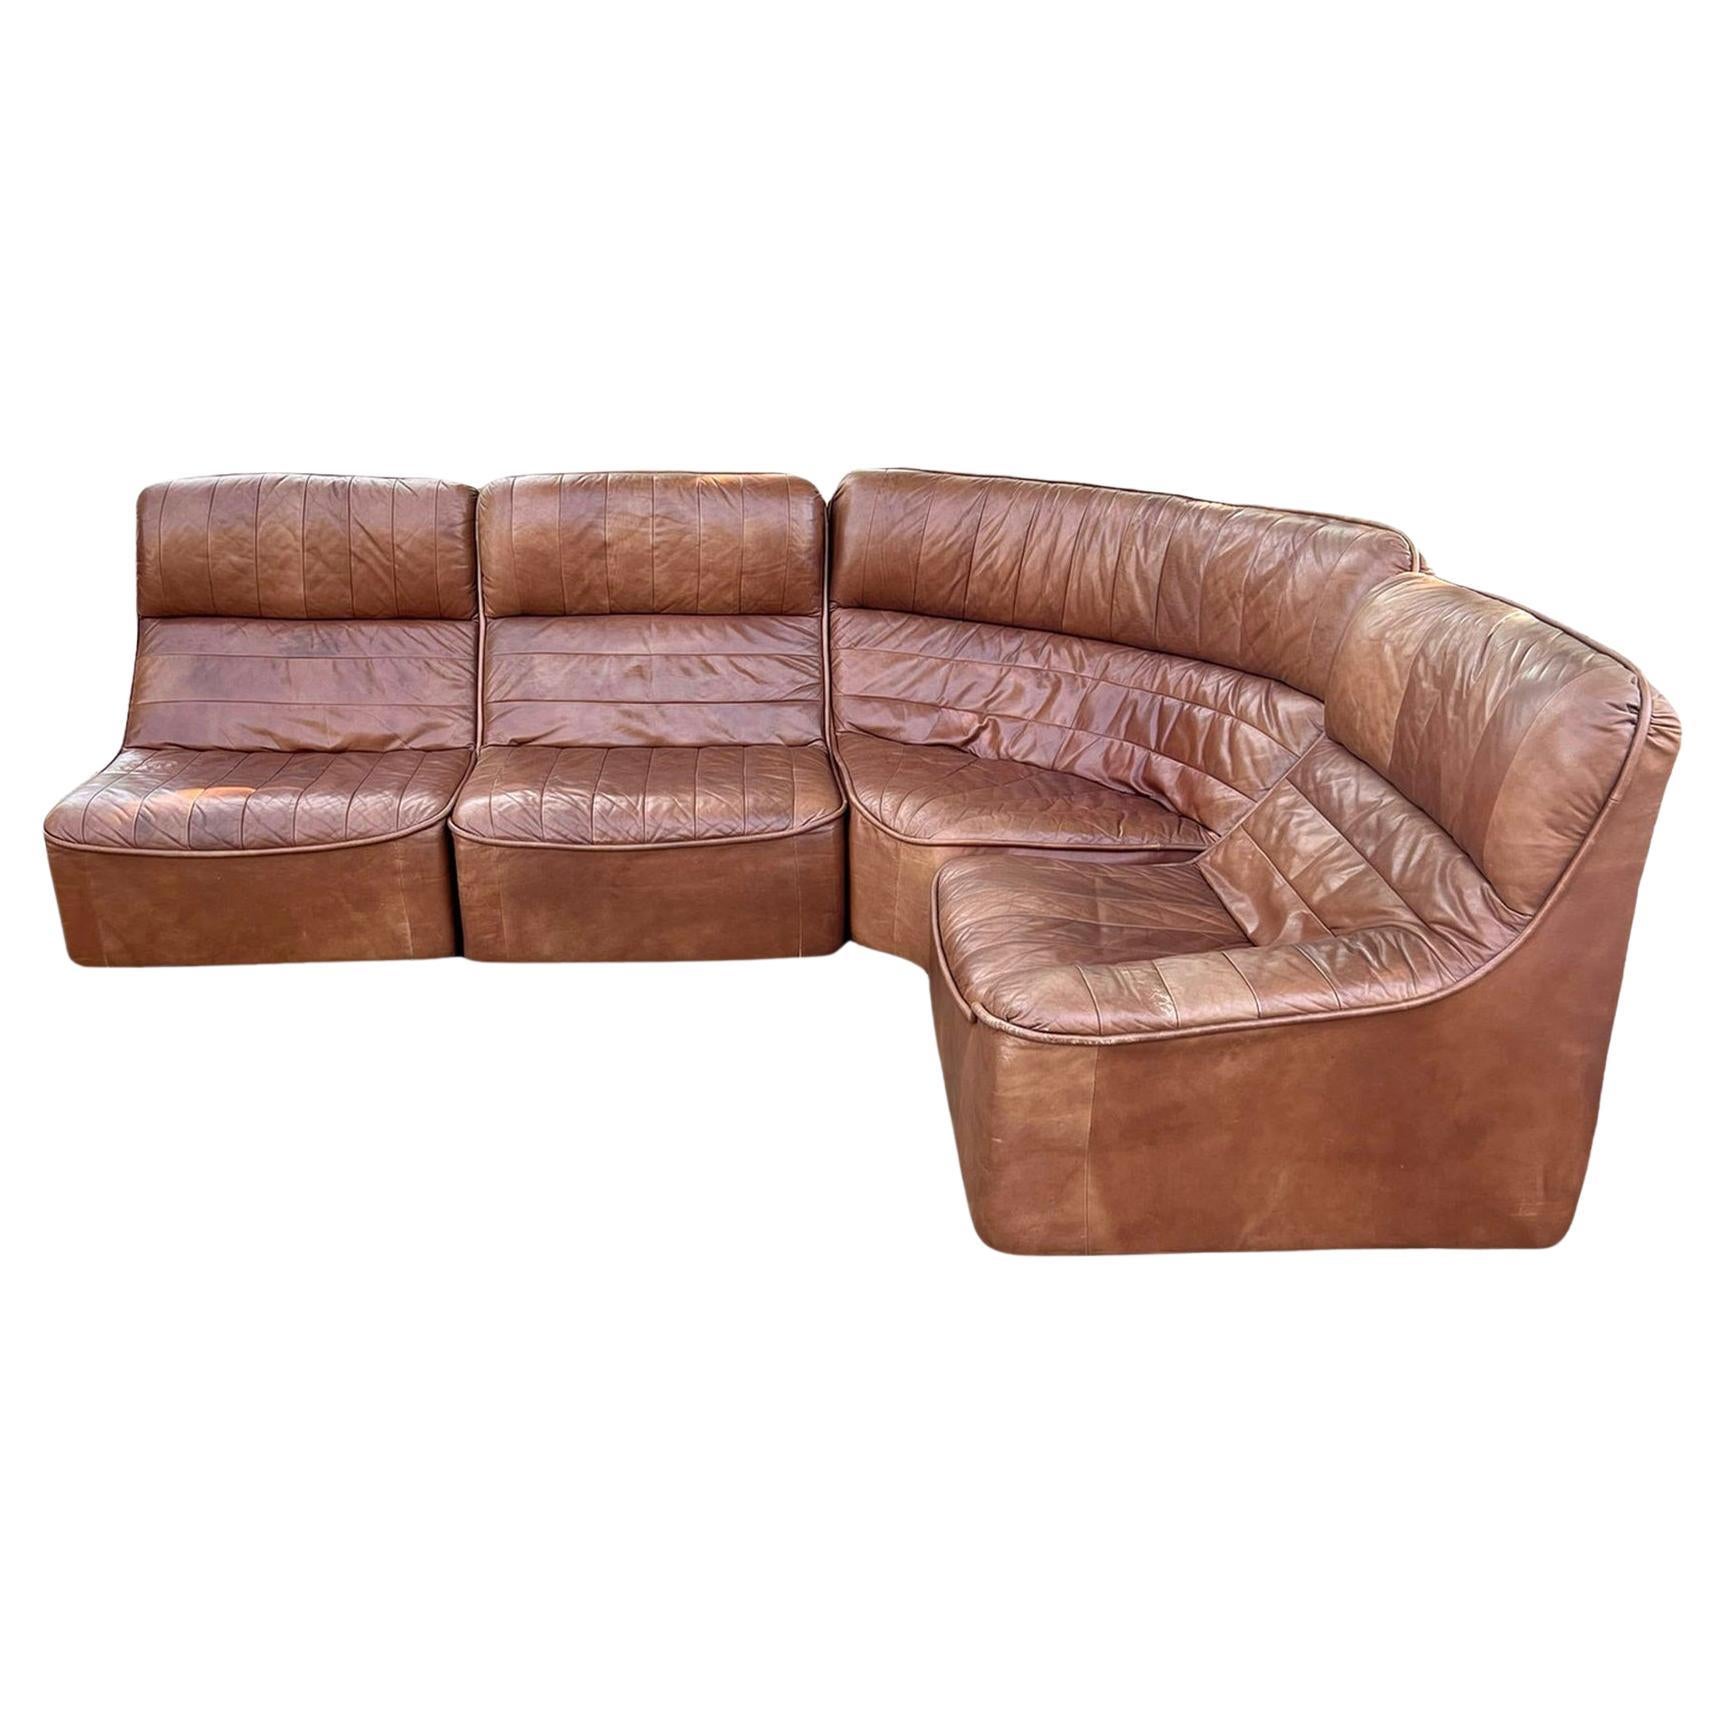 1970s Modular Leather Sofa in Cognac Leather